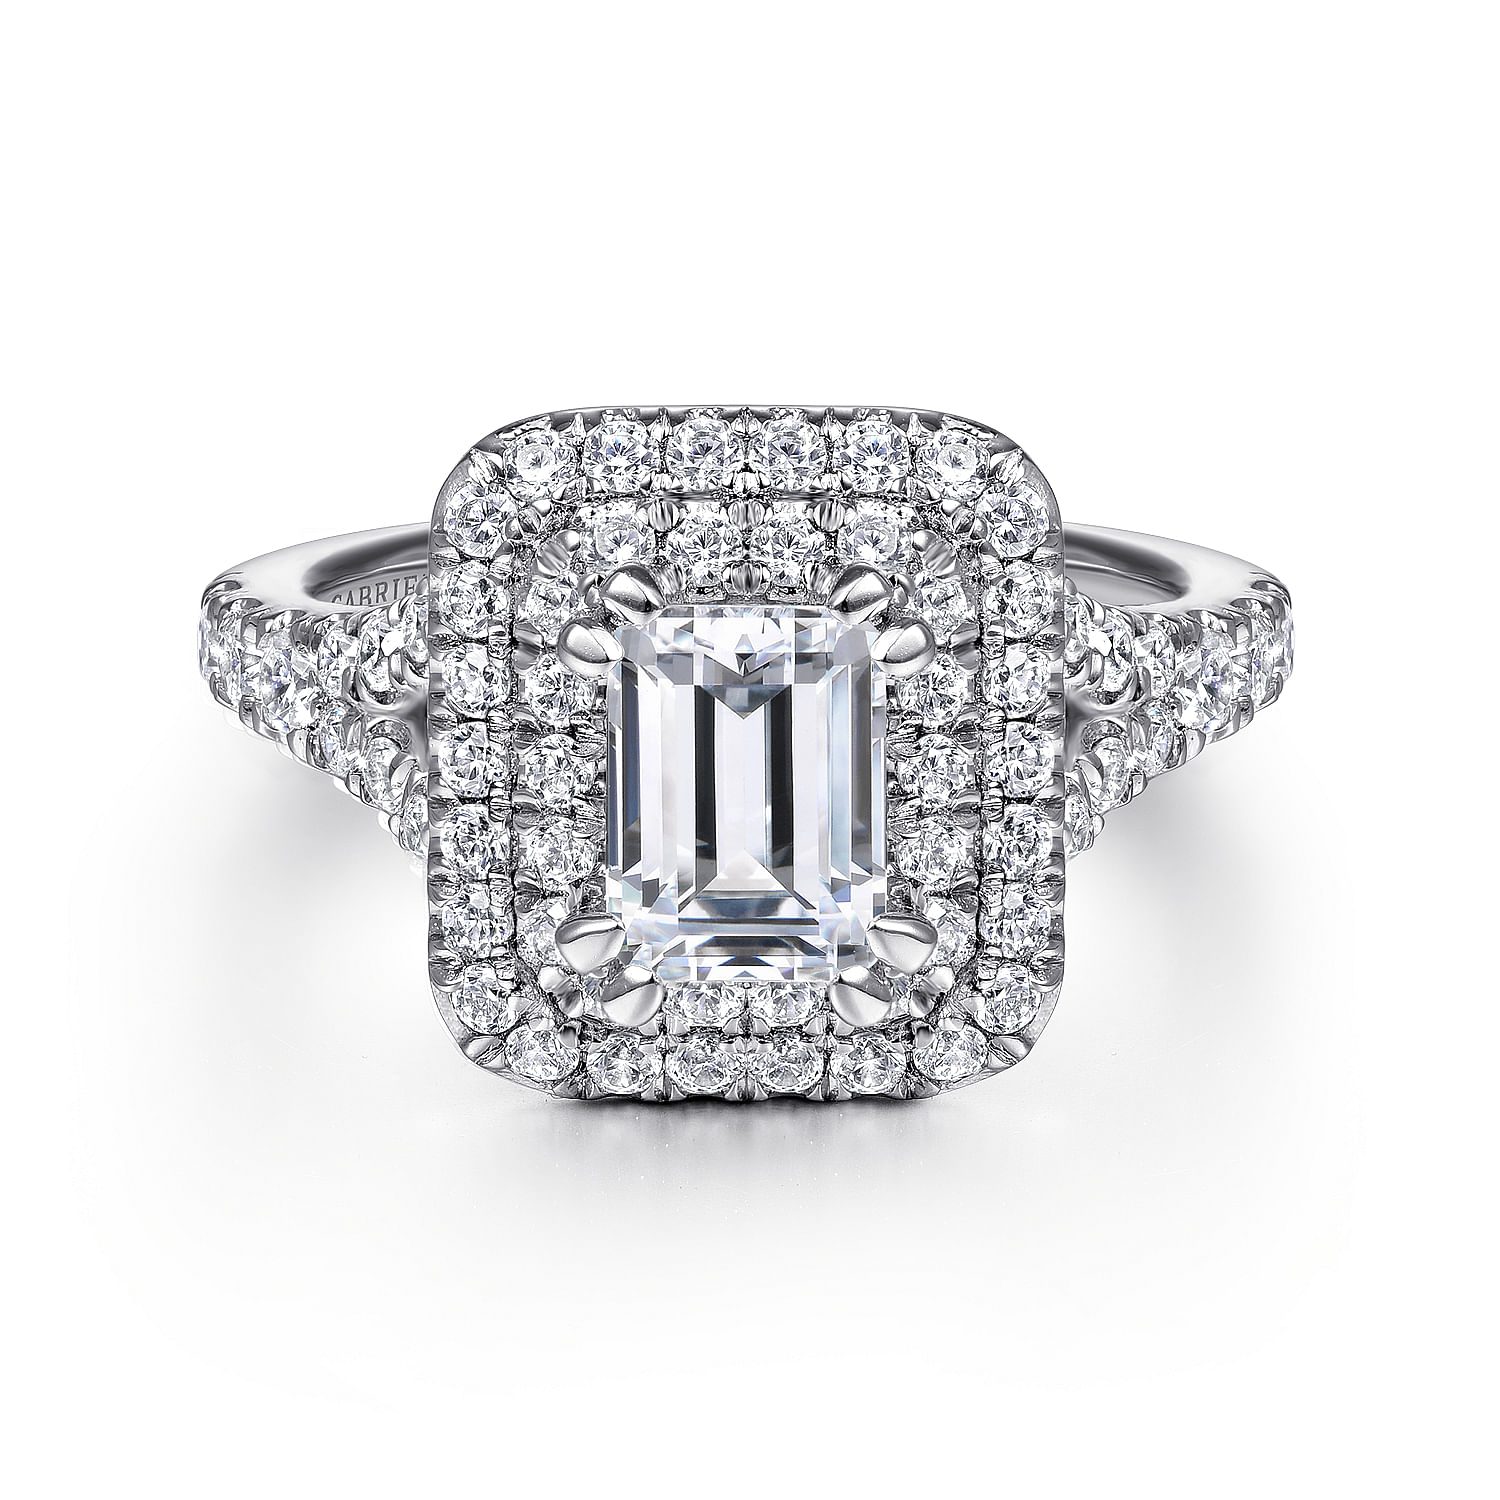 Lexie---14K-White-Gold-Emerald-Cut-Double-Halo-Diamond-Engagement-Ring1